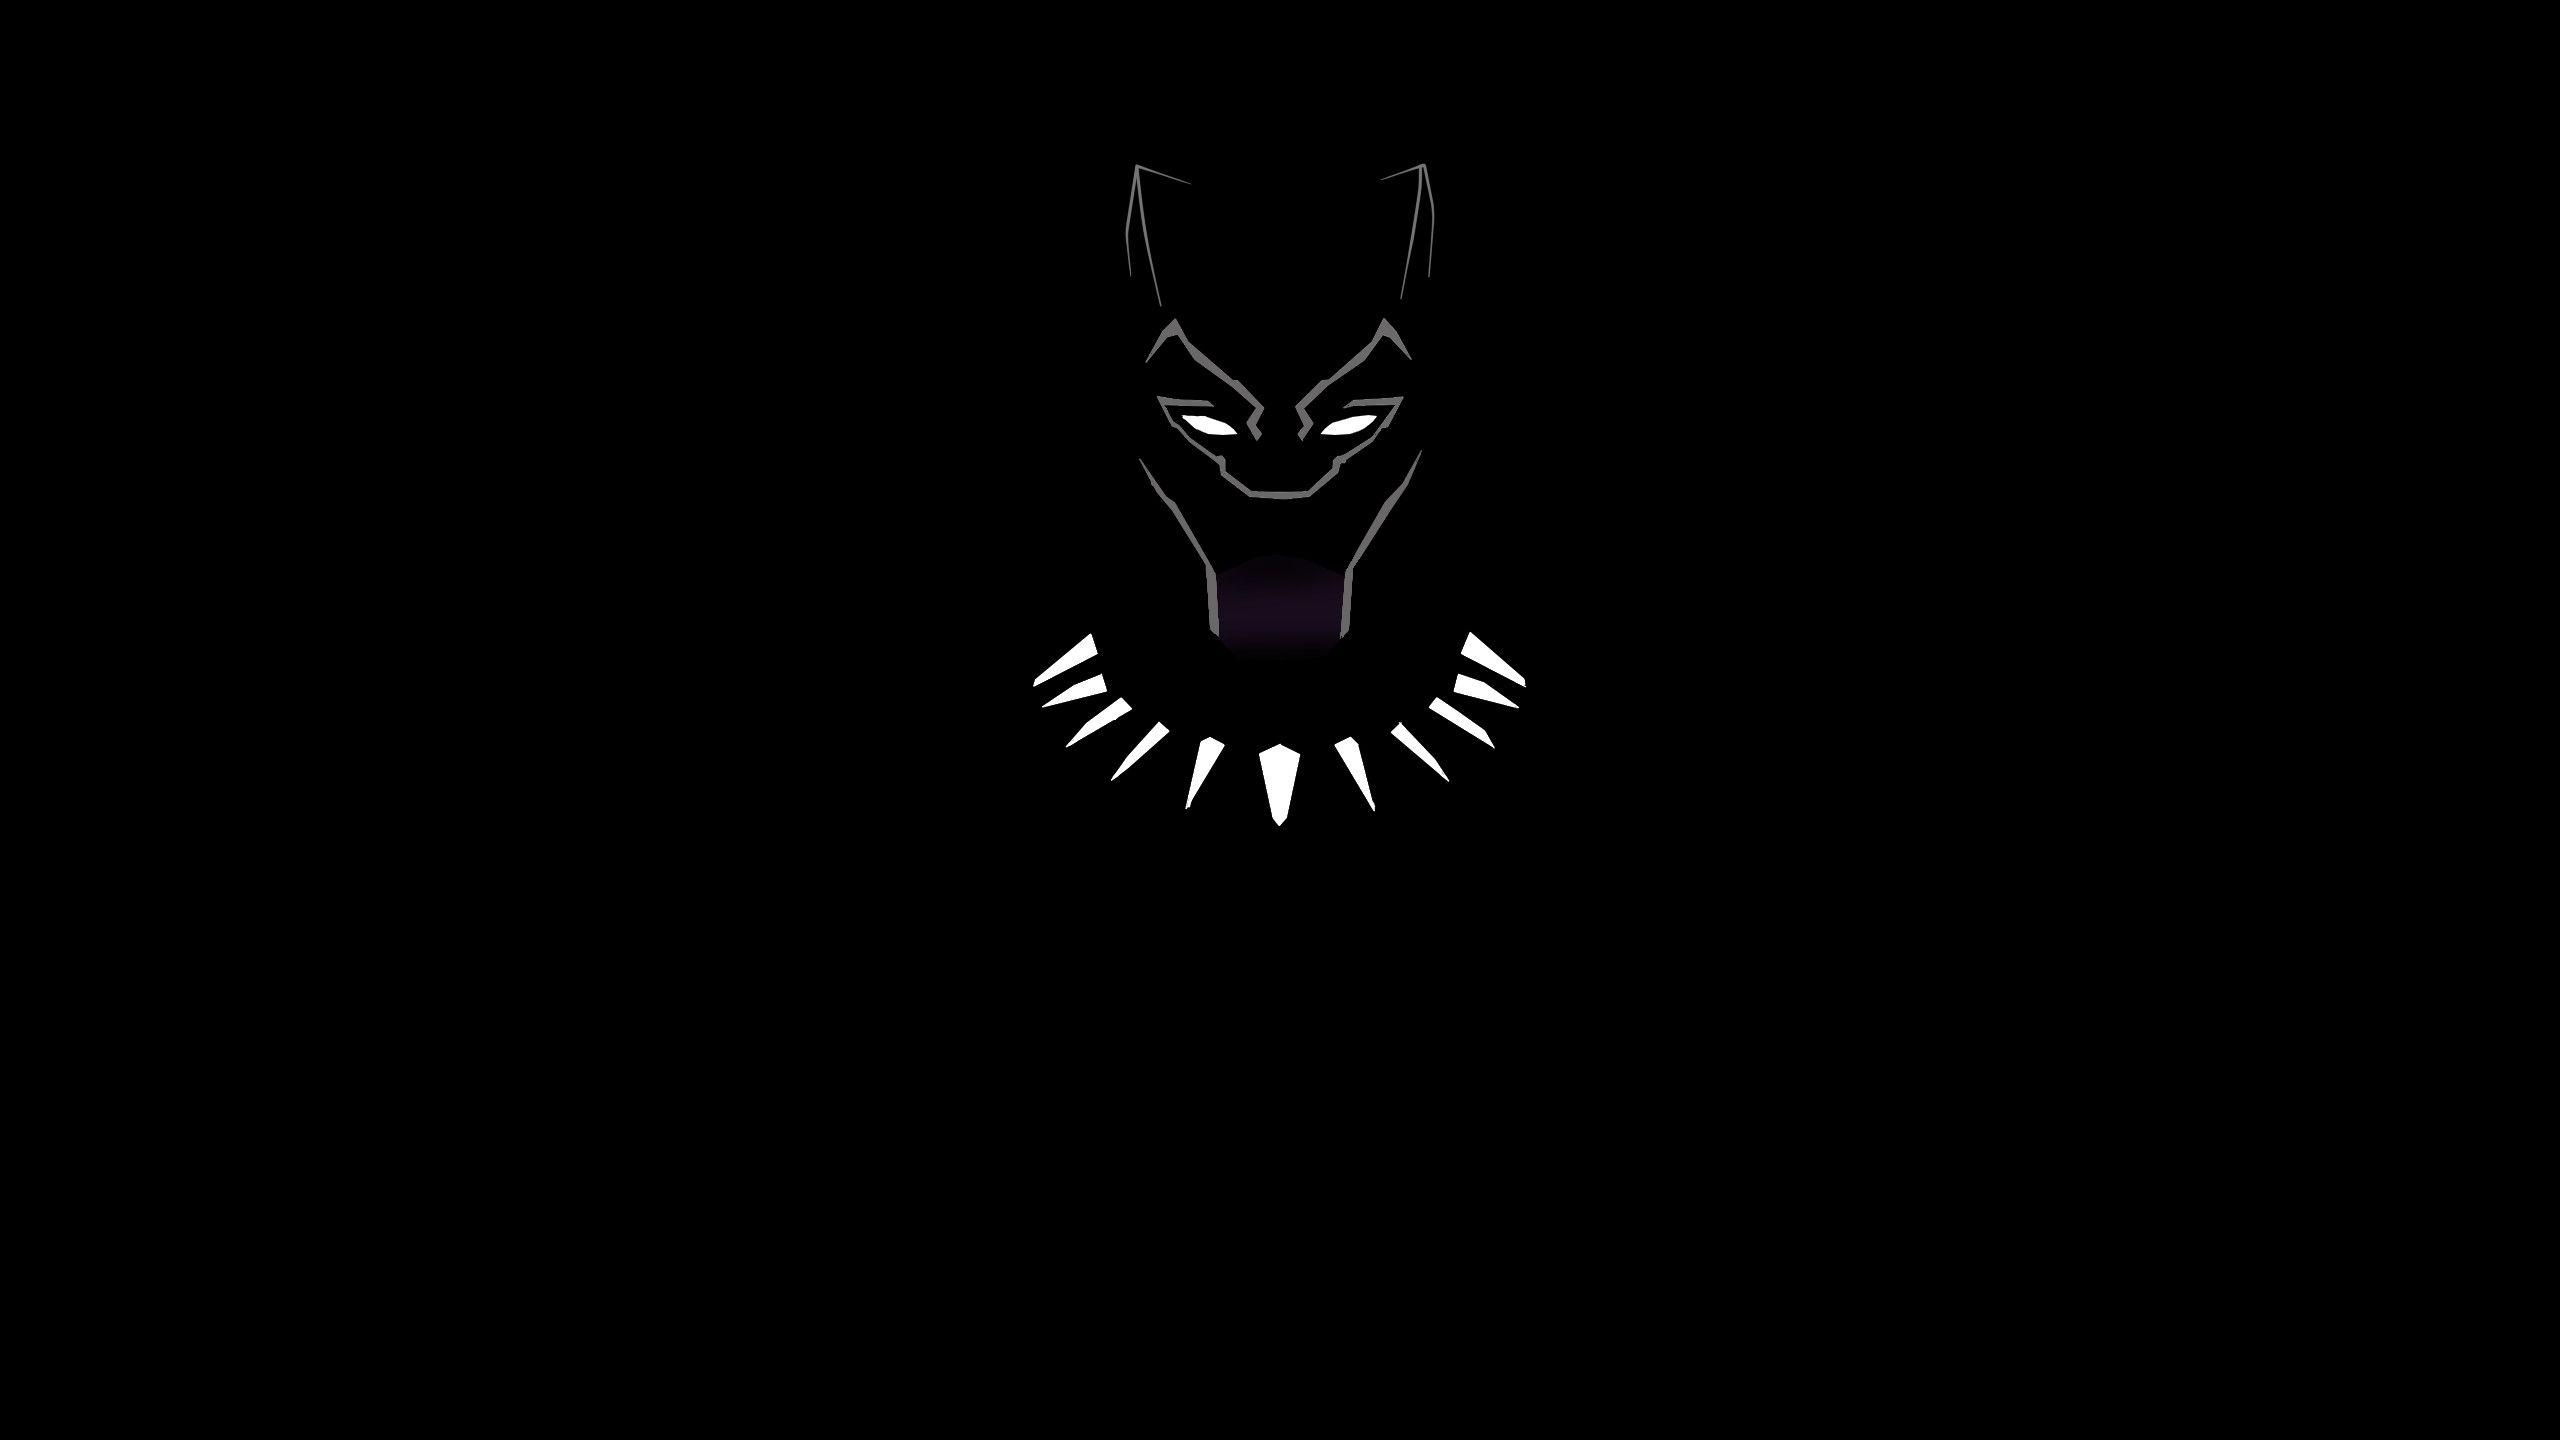  Black  Panther  4K Ultra HD Dark Wallpapers  Top Free Black  